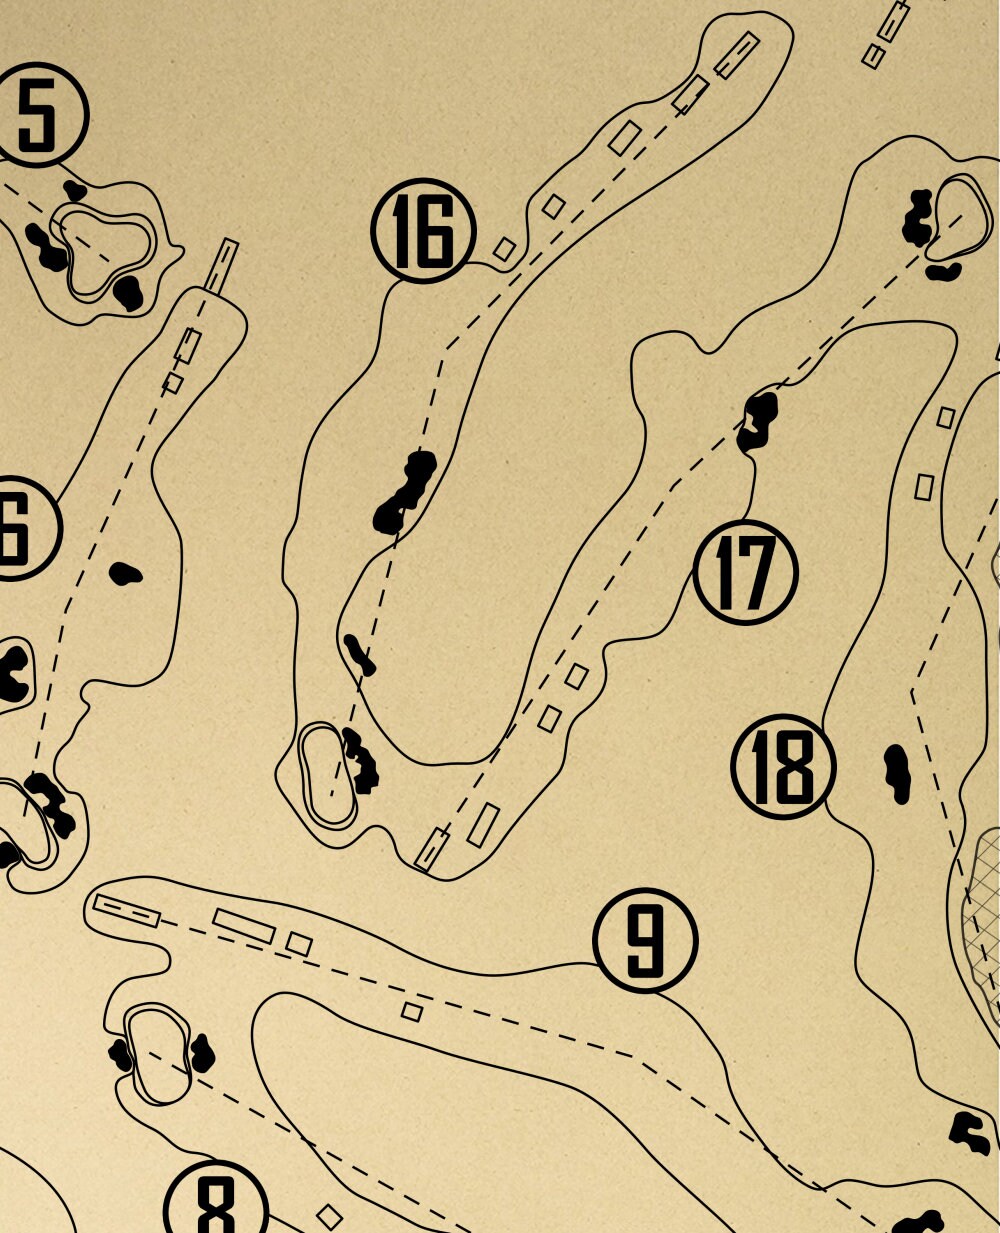 Frederica Golf Club Outline (Print)